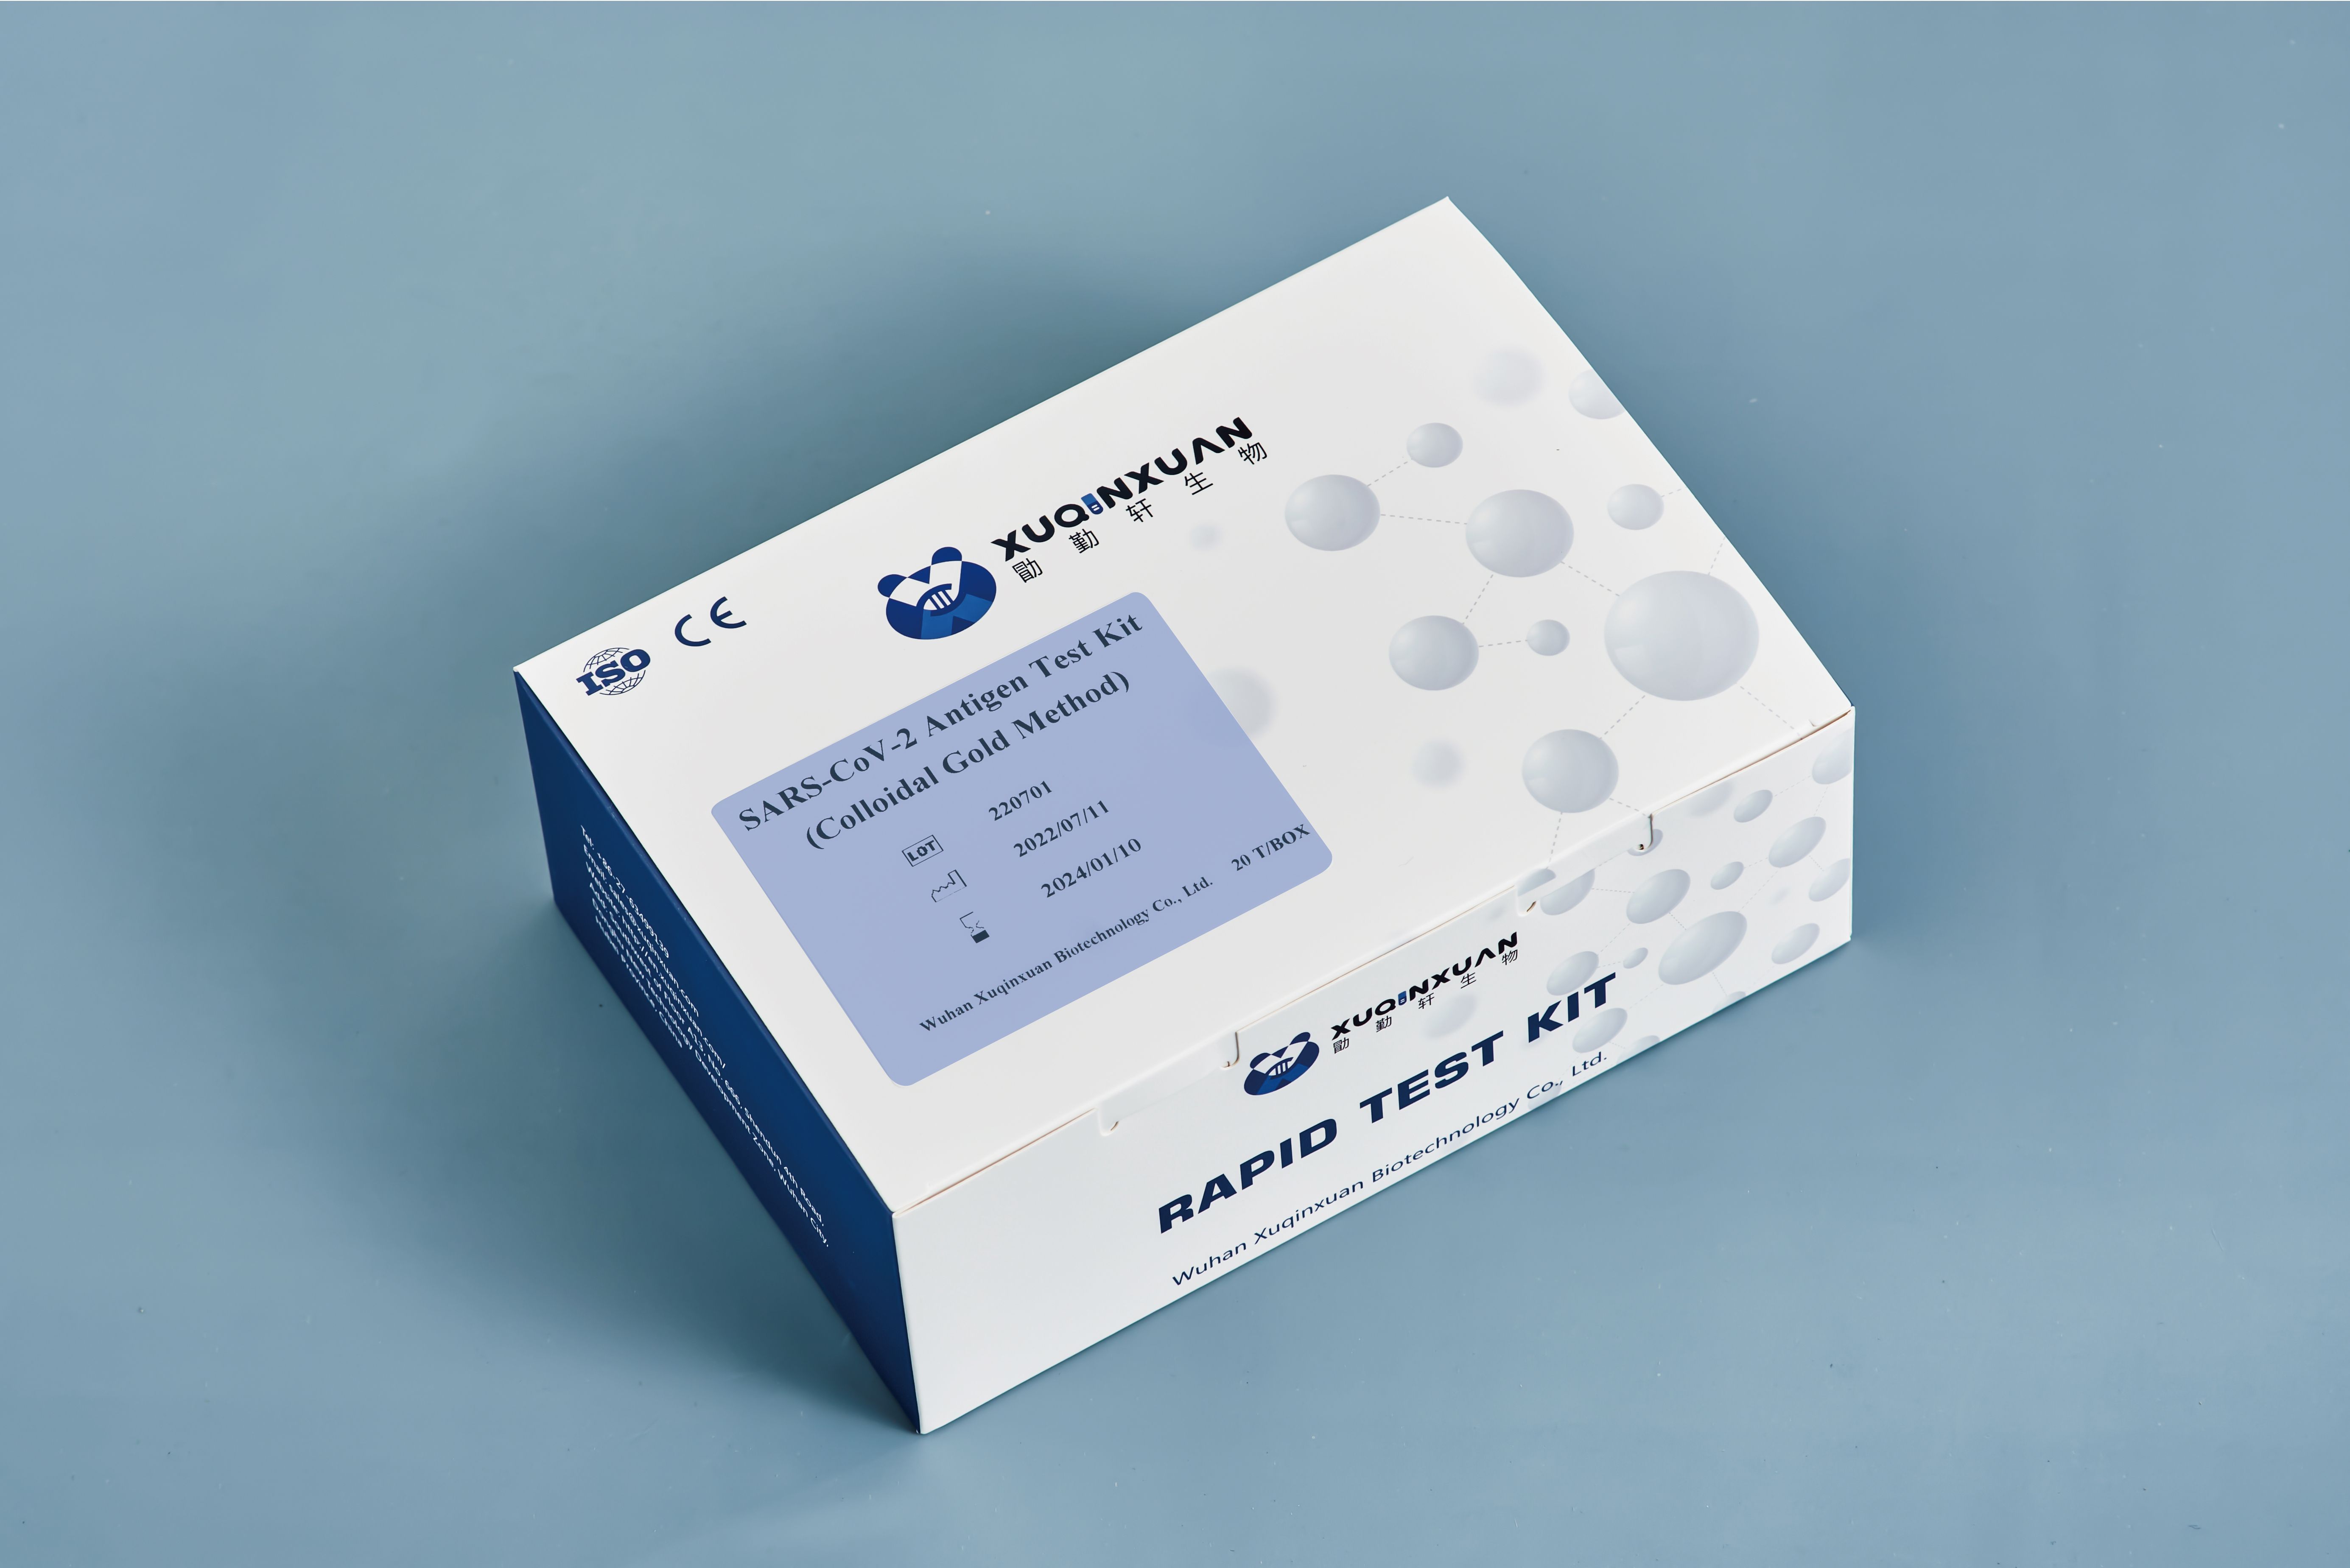 SARS-CoV-2 Antigen Test Kit (Colloidal Gold Method)